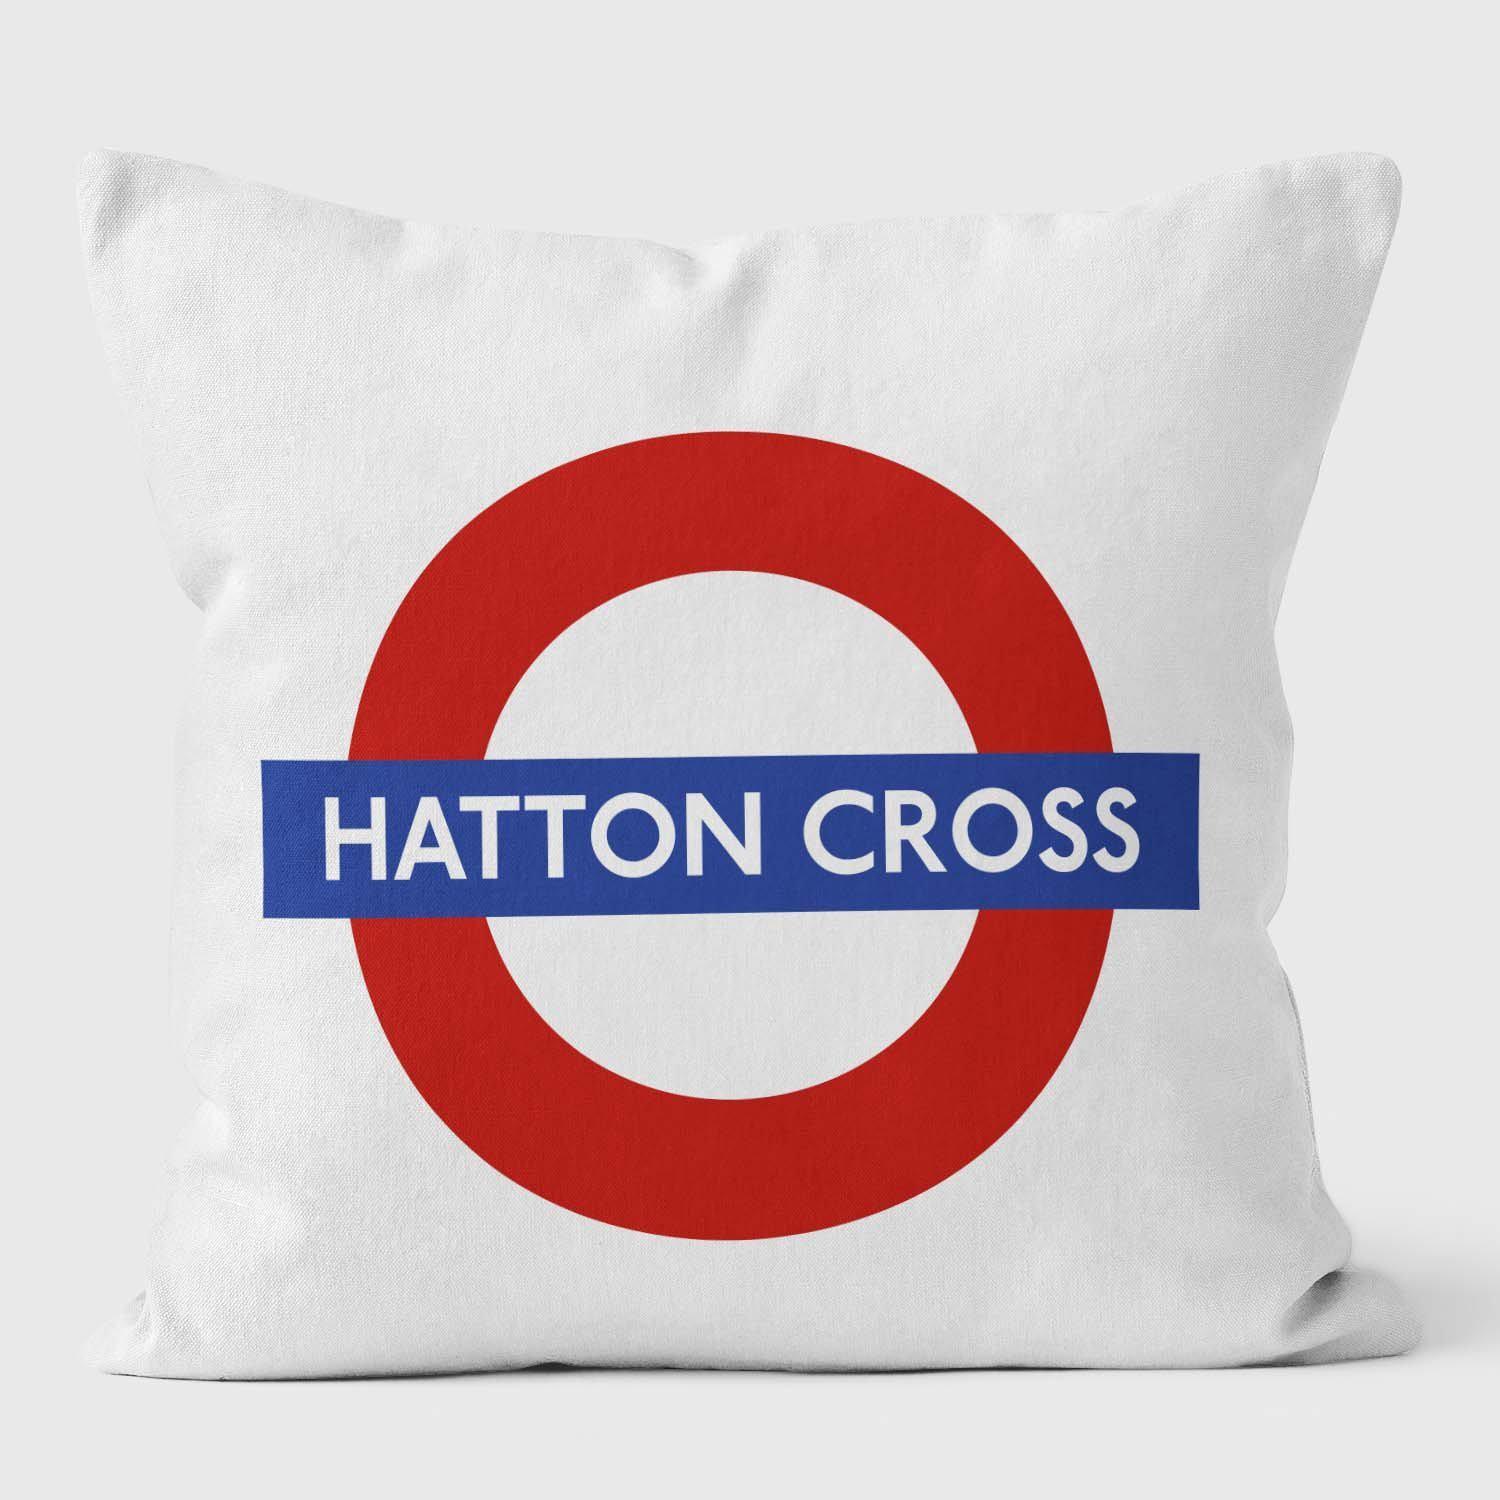 Hatton Cross London Underground Tube Station Roundel Cushion - Handmade Cushions UK - WeLoveCushions